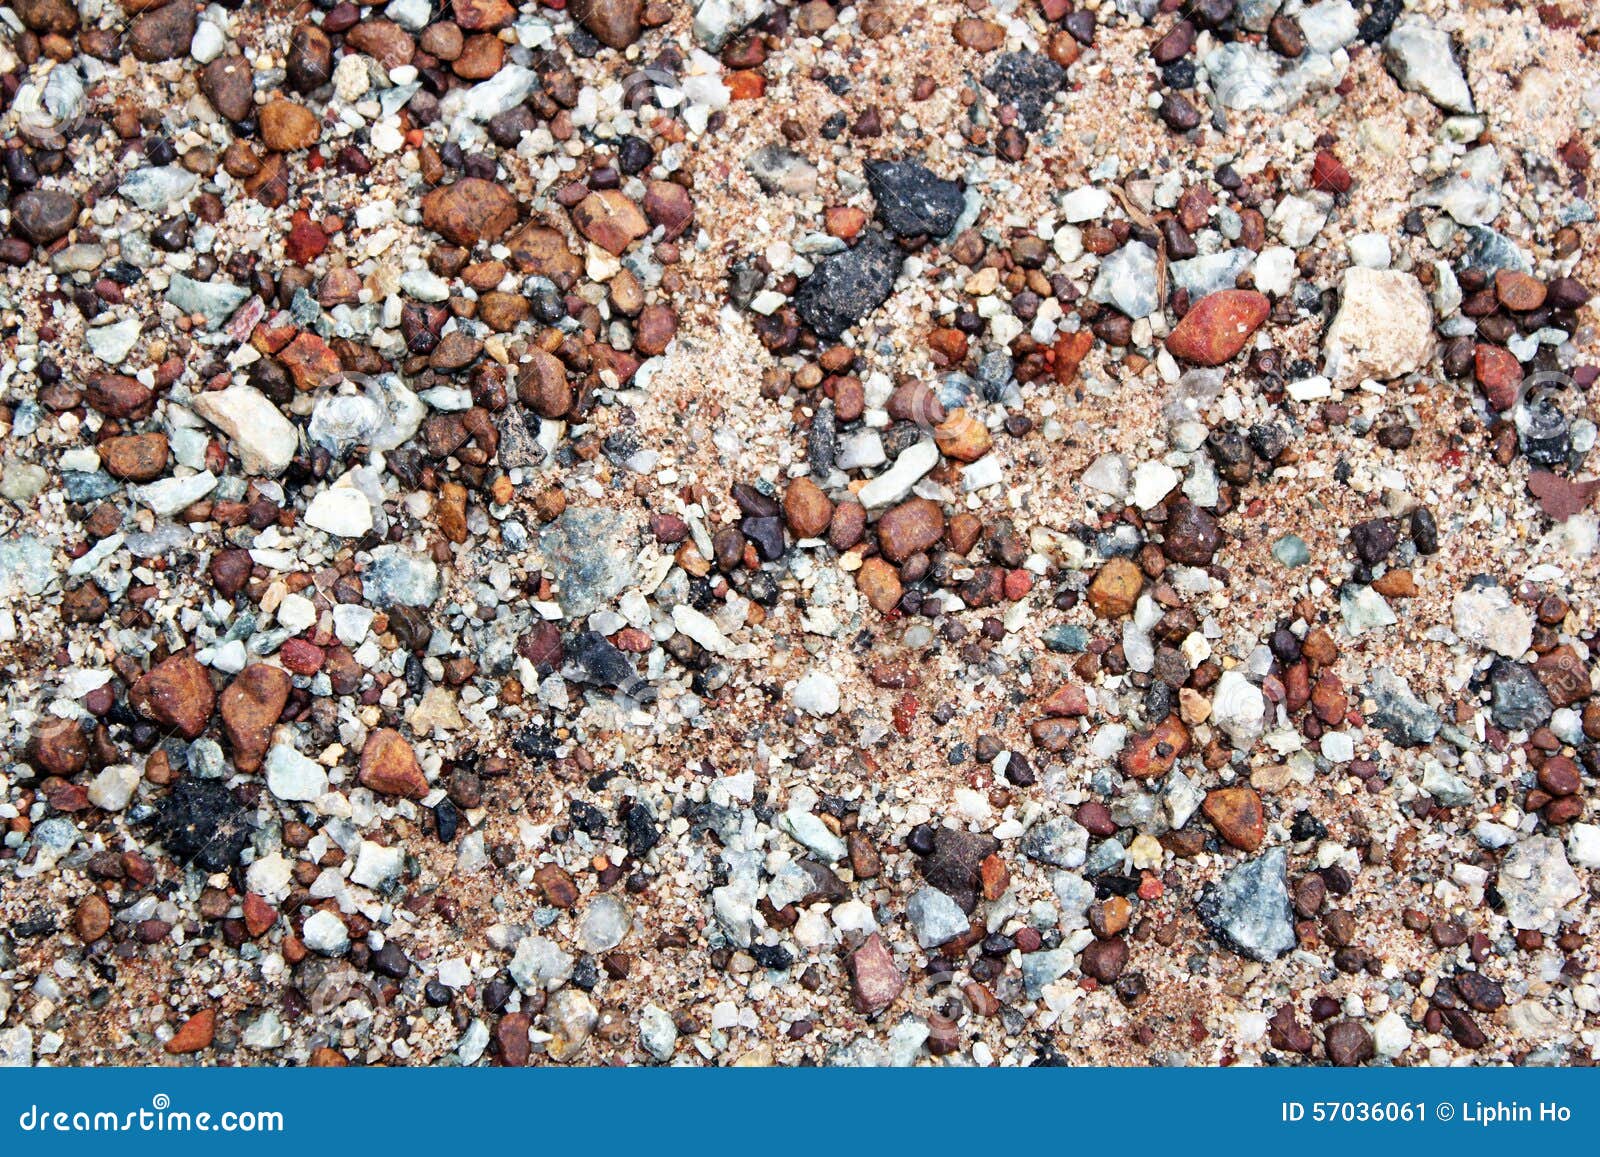 Small rocks stock image. Image of gravel, nature, diversity - 57036061